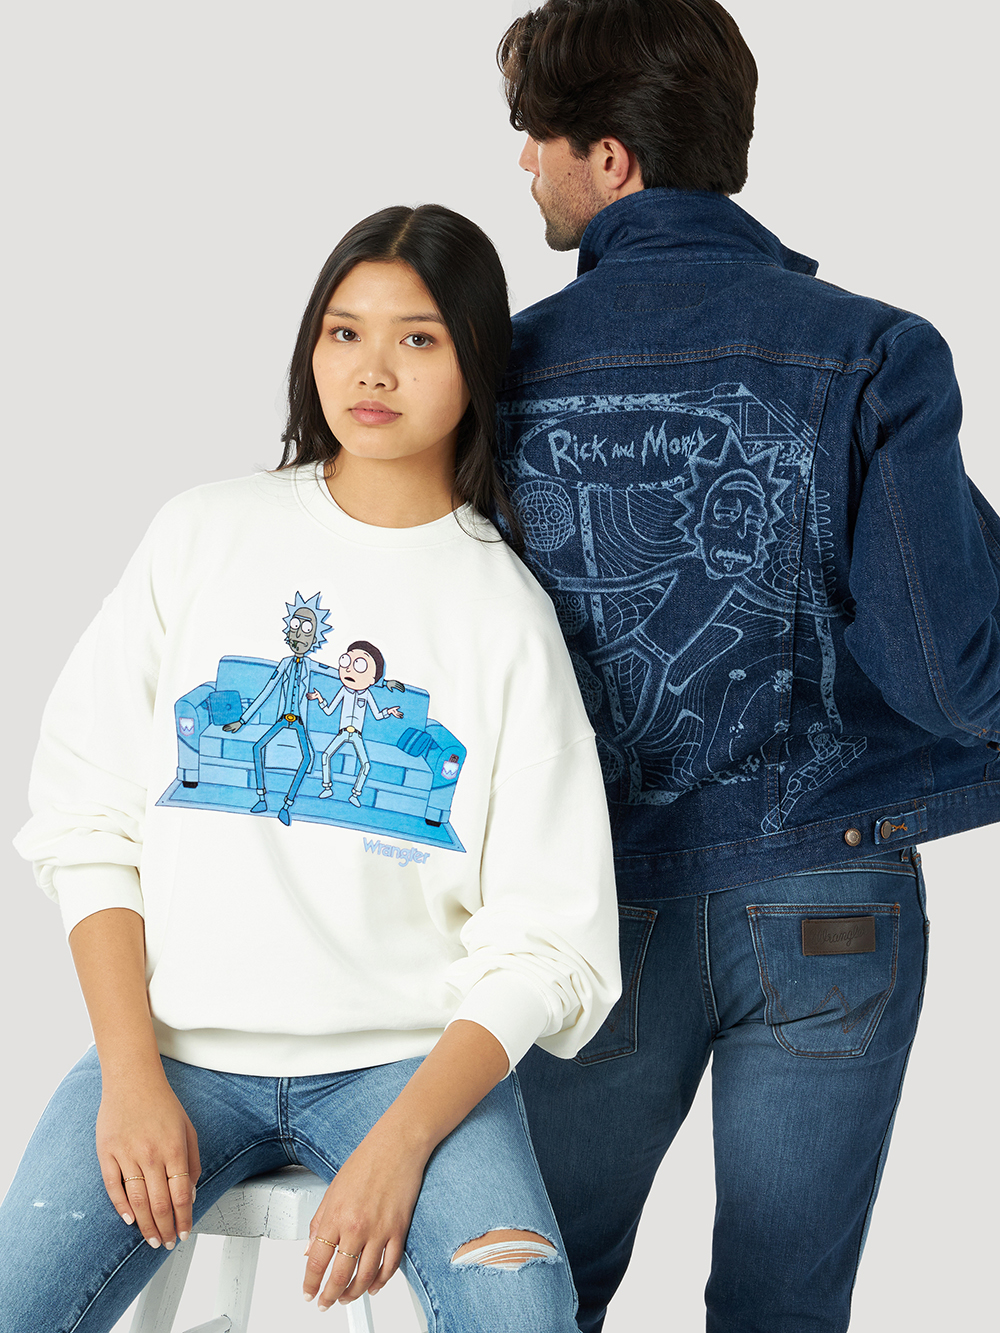 Rick and Morty X Wrangler sweatshirt and denim jacket